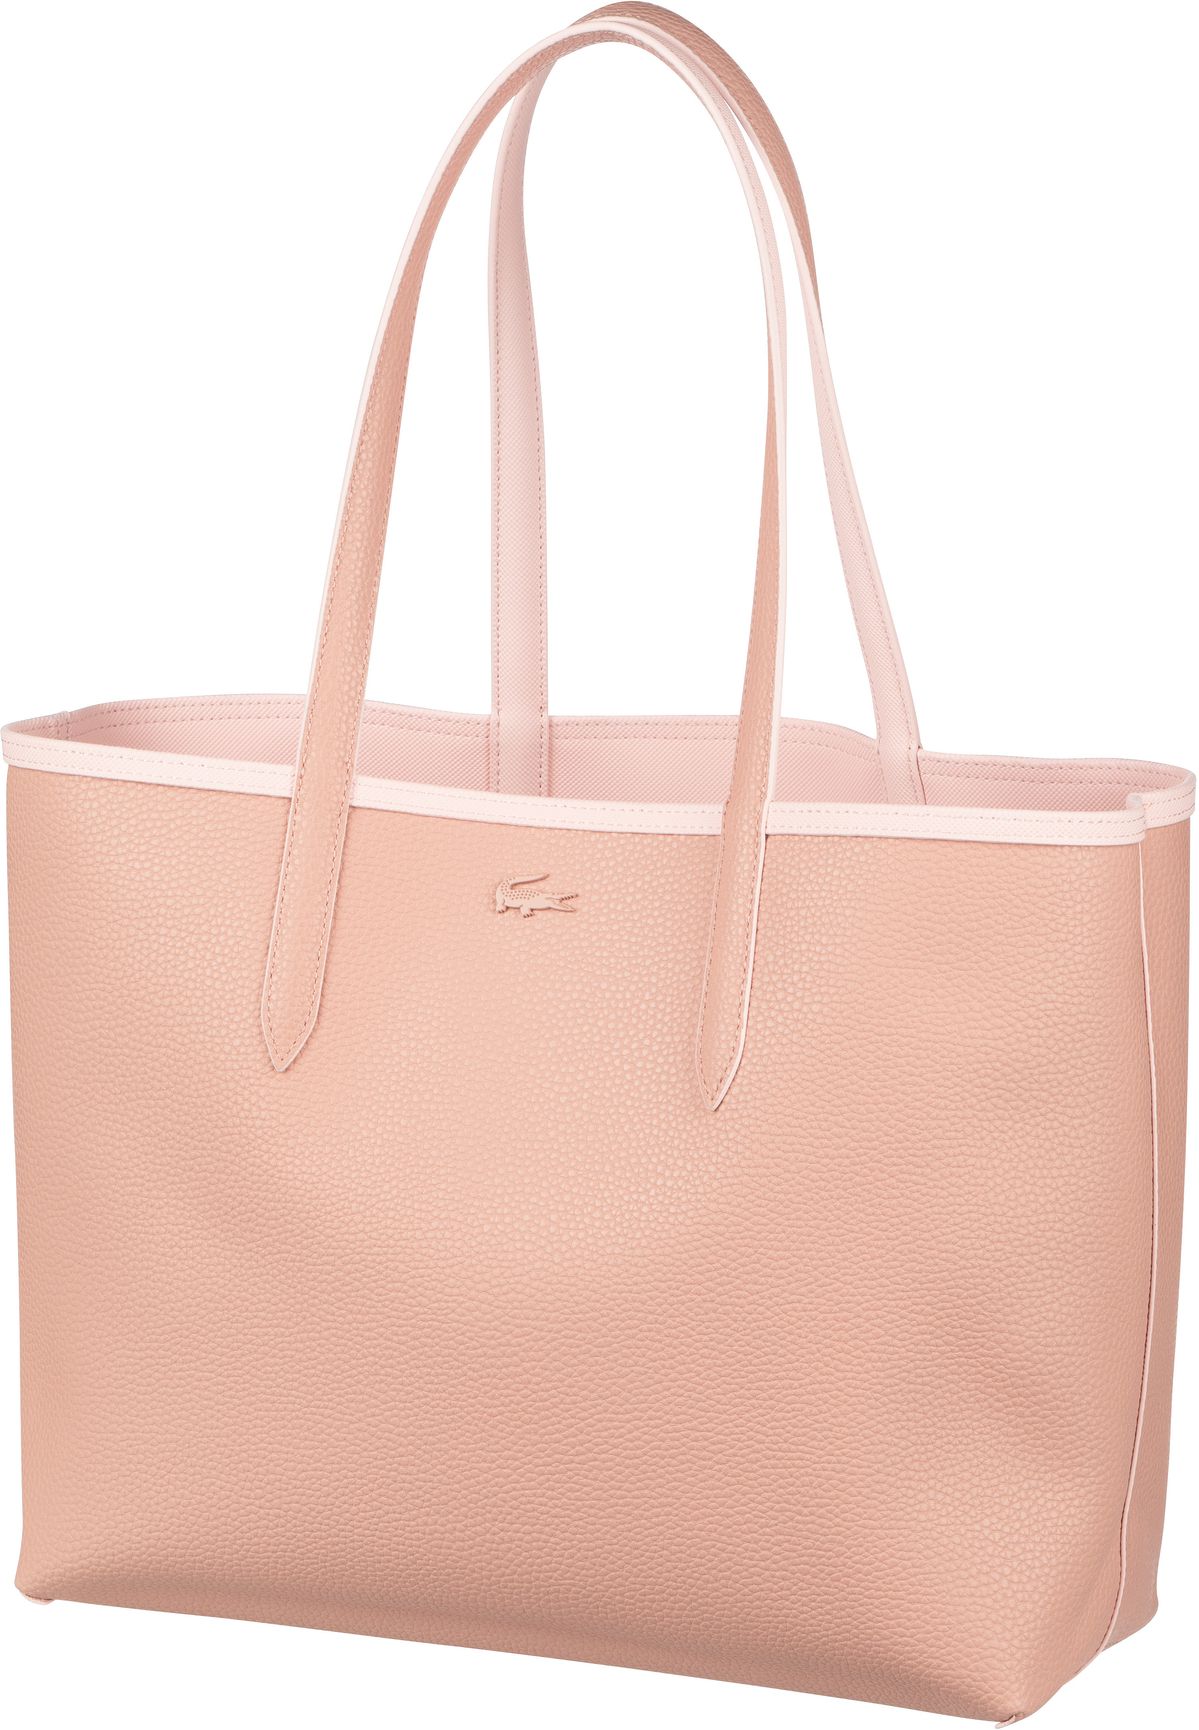 Lacoste Anna Shopping Bag 2142 - Chair/Amande (innen: Rosa)